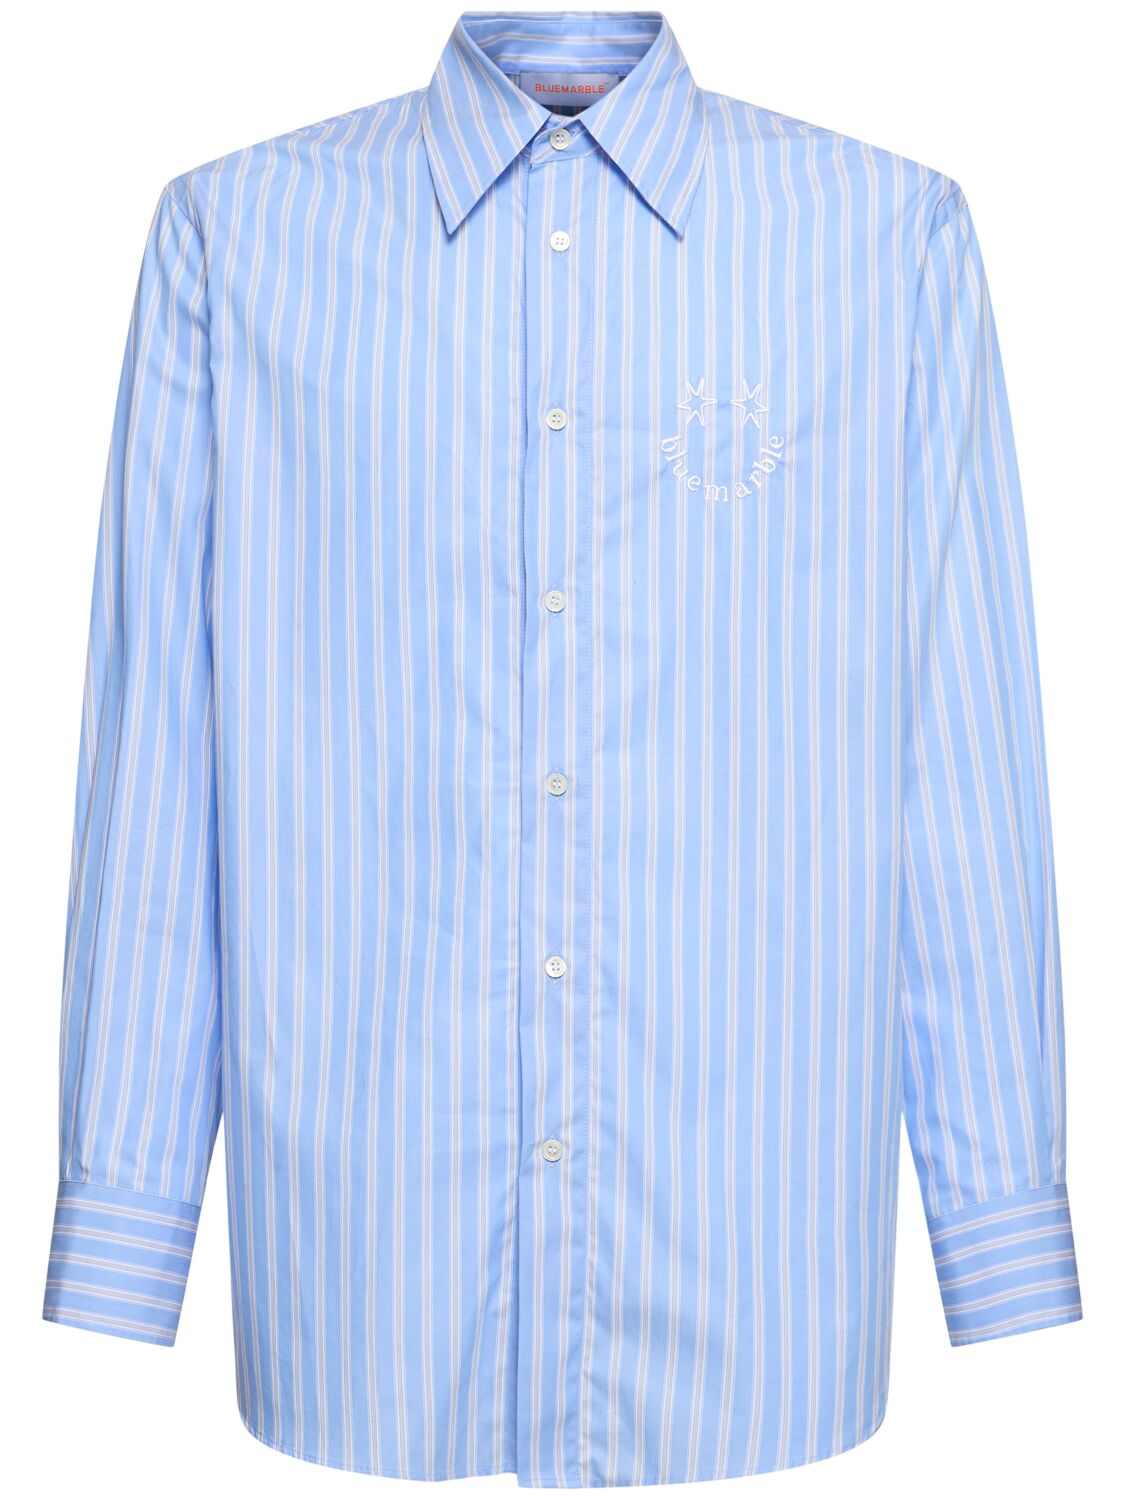 Image of Smiley Striped Cotton Poplin Shirt